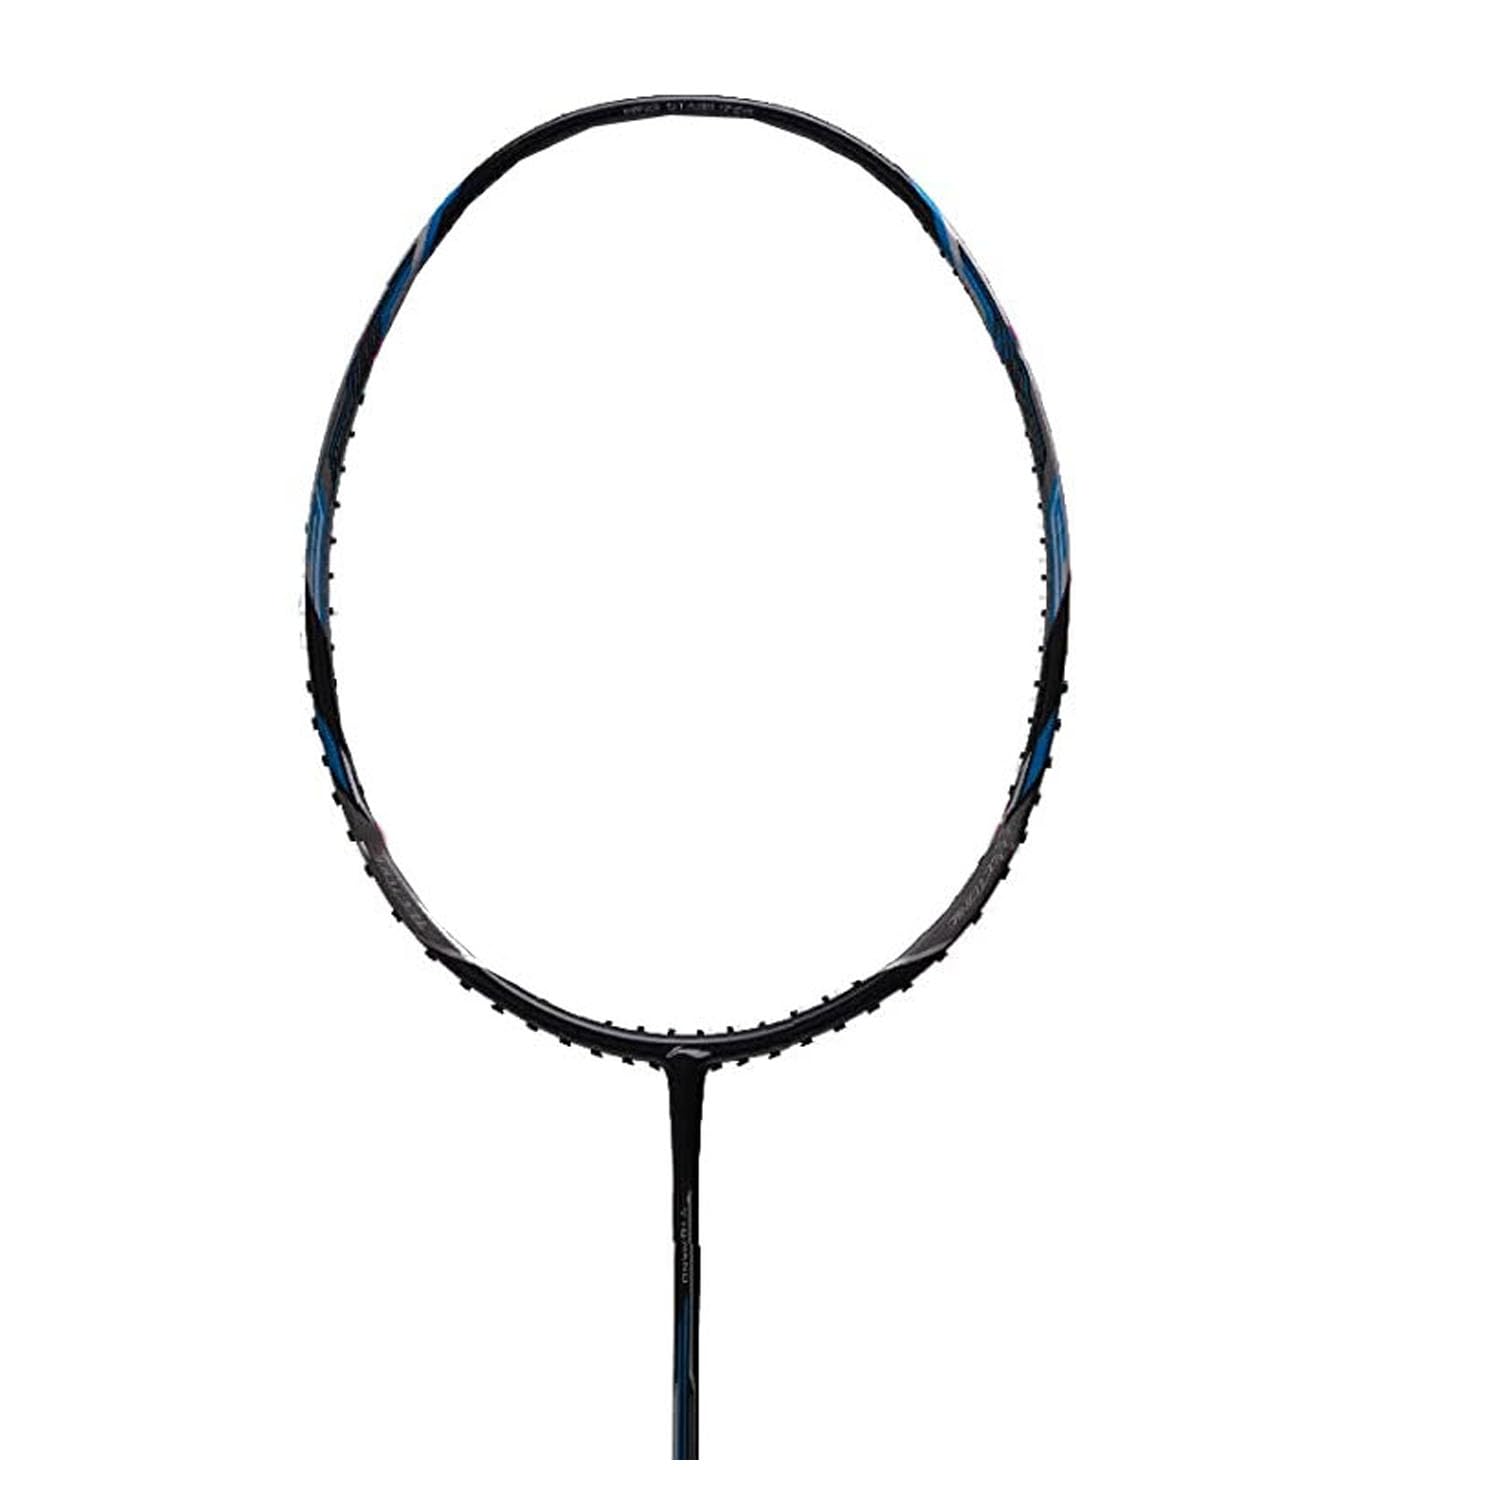 Li-Ning Tectonic 3R Unstrung Badminton Racket, Black/Silver/Blue - Best Price online Prokicksports.com